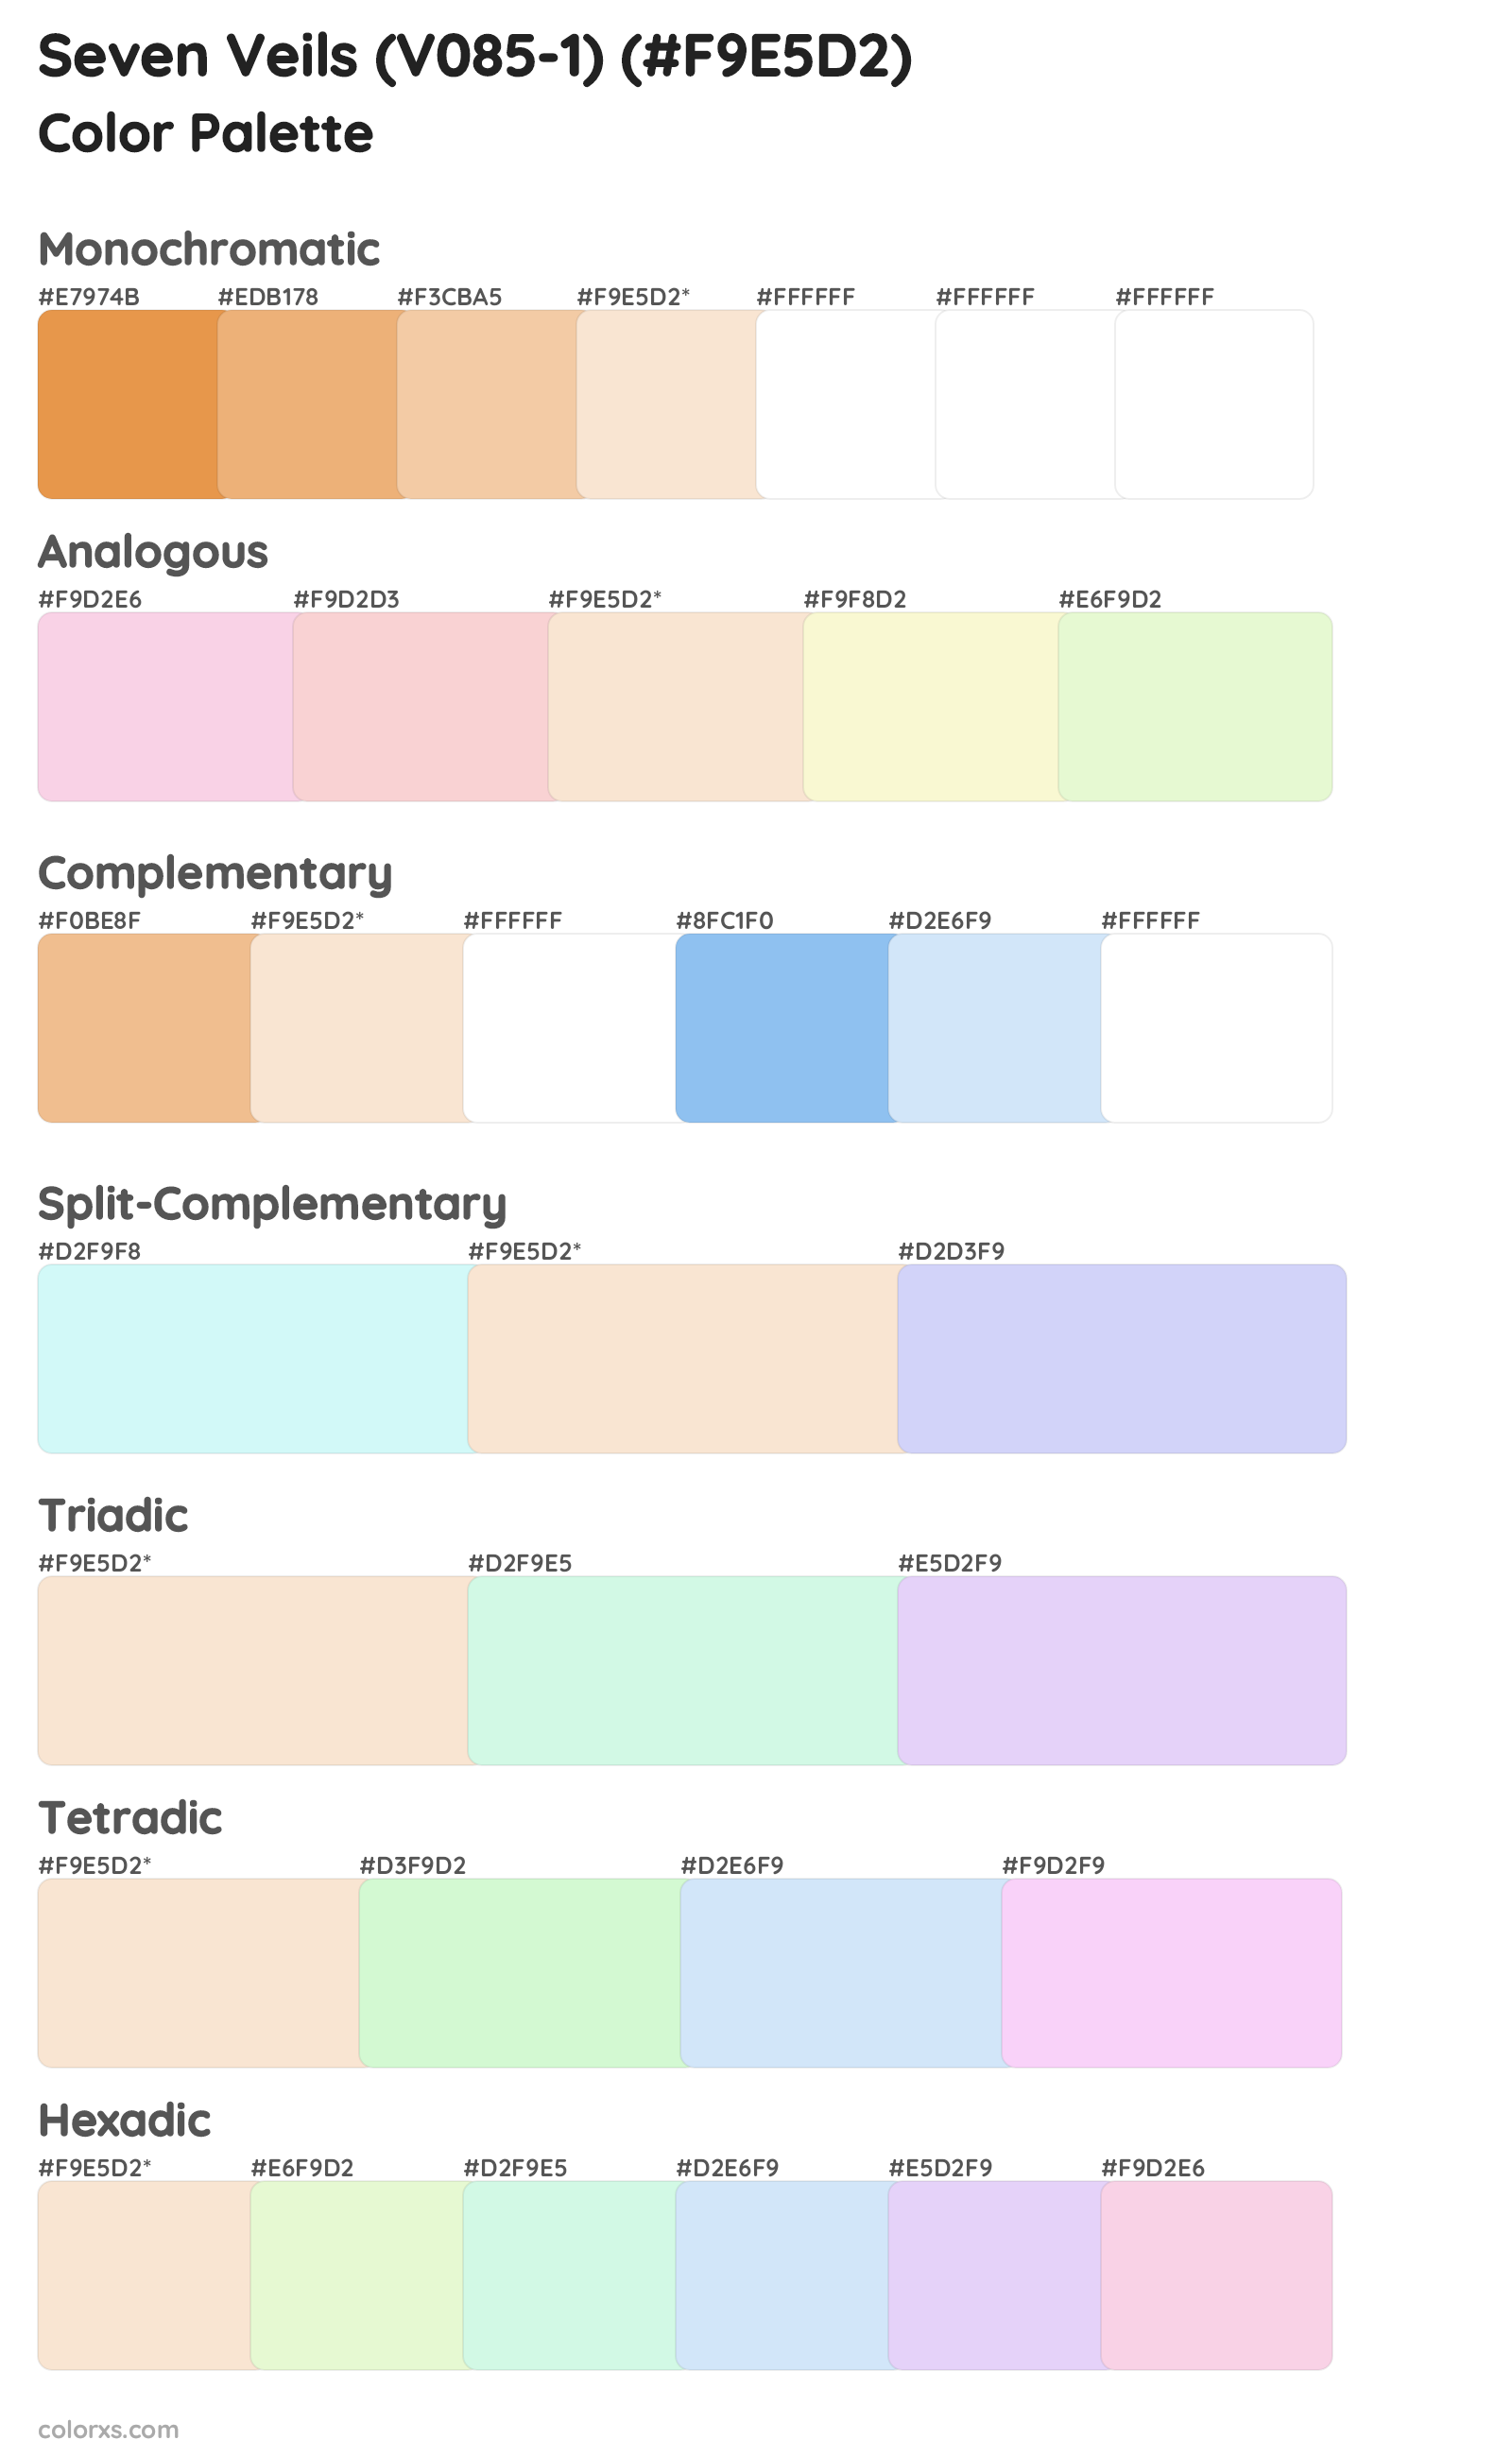 Seven Veils (V085-1) Color Scheme Palettes